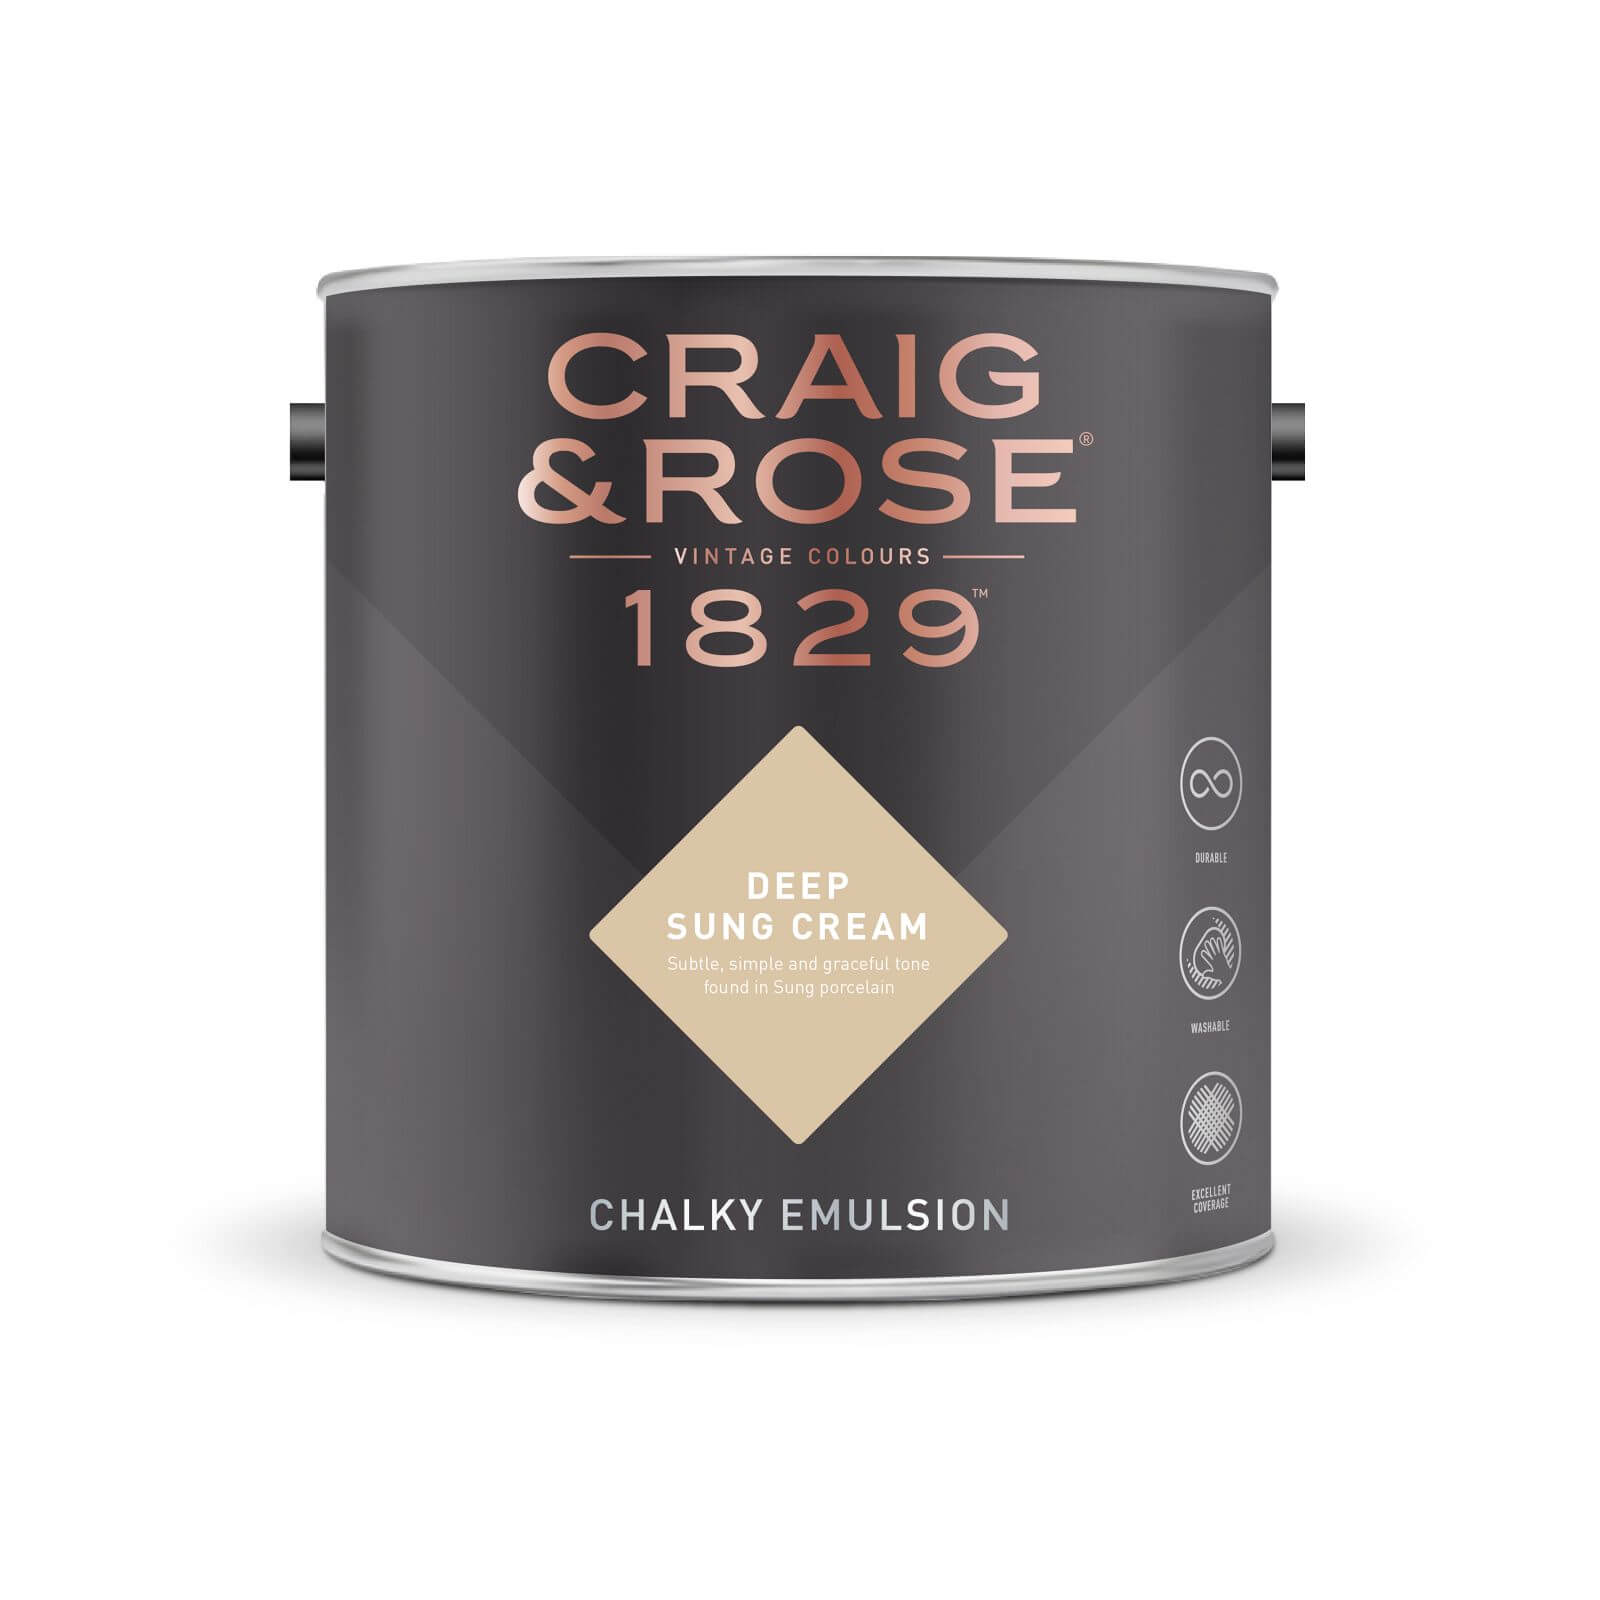 Craig & Rose 1829 Chalky Emulsion Paint Deep Sung Cream - Tester 50ml